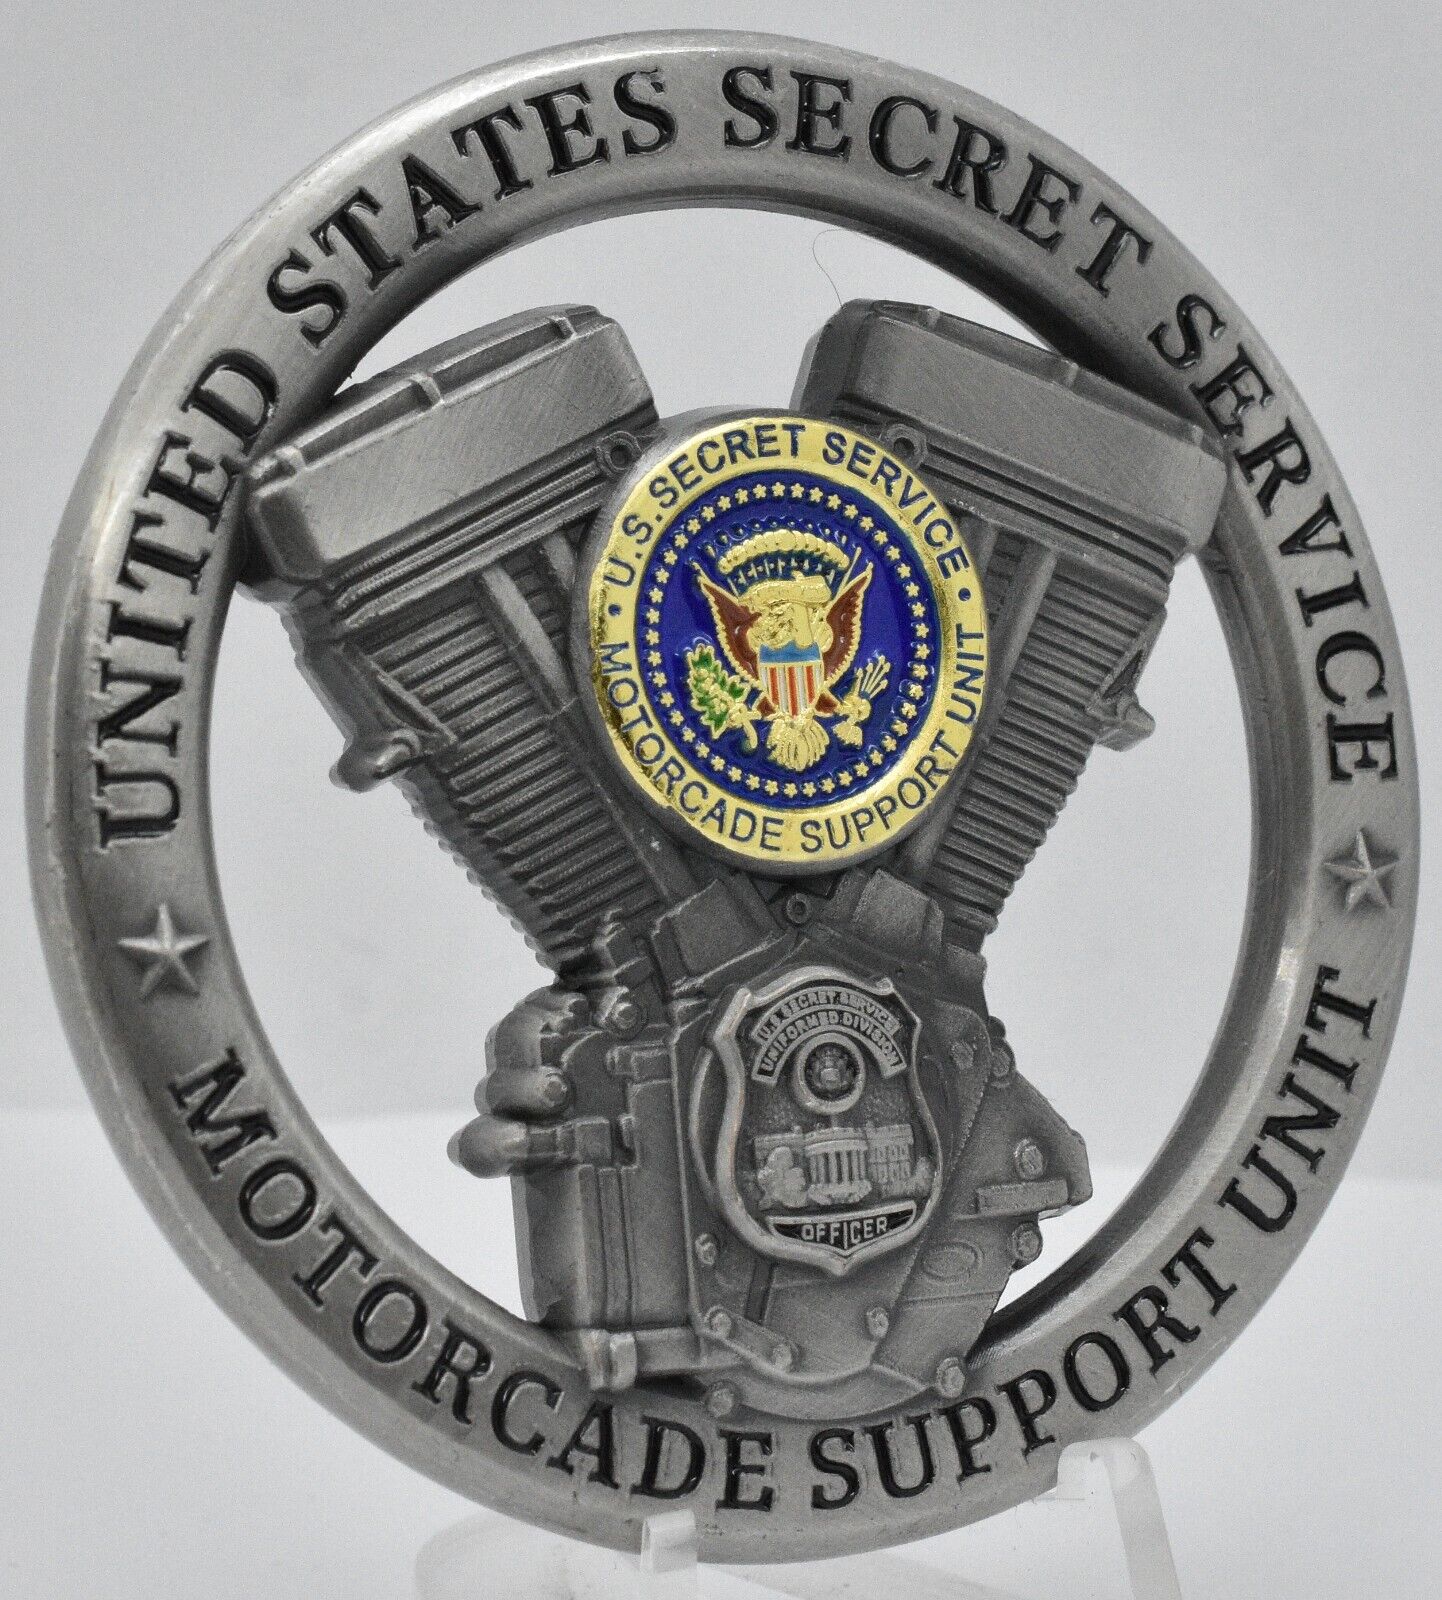 Secret Service Motorcade Support Unit Challenge Coin